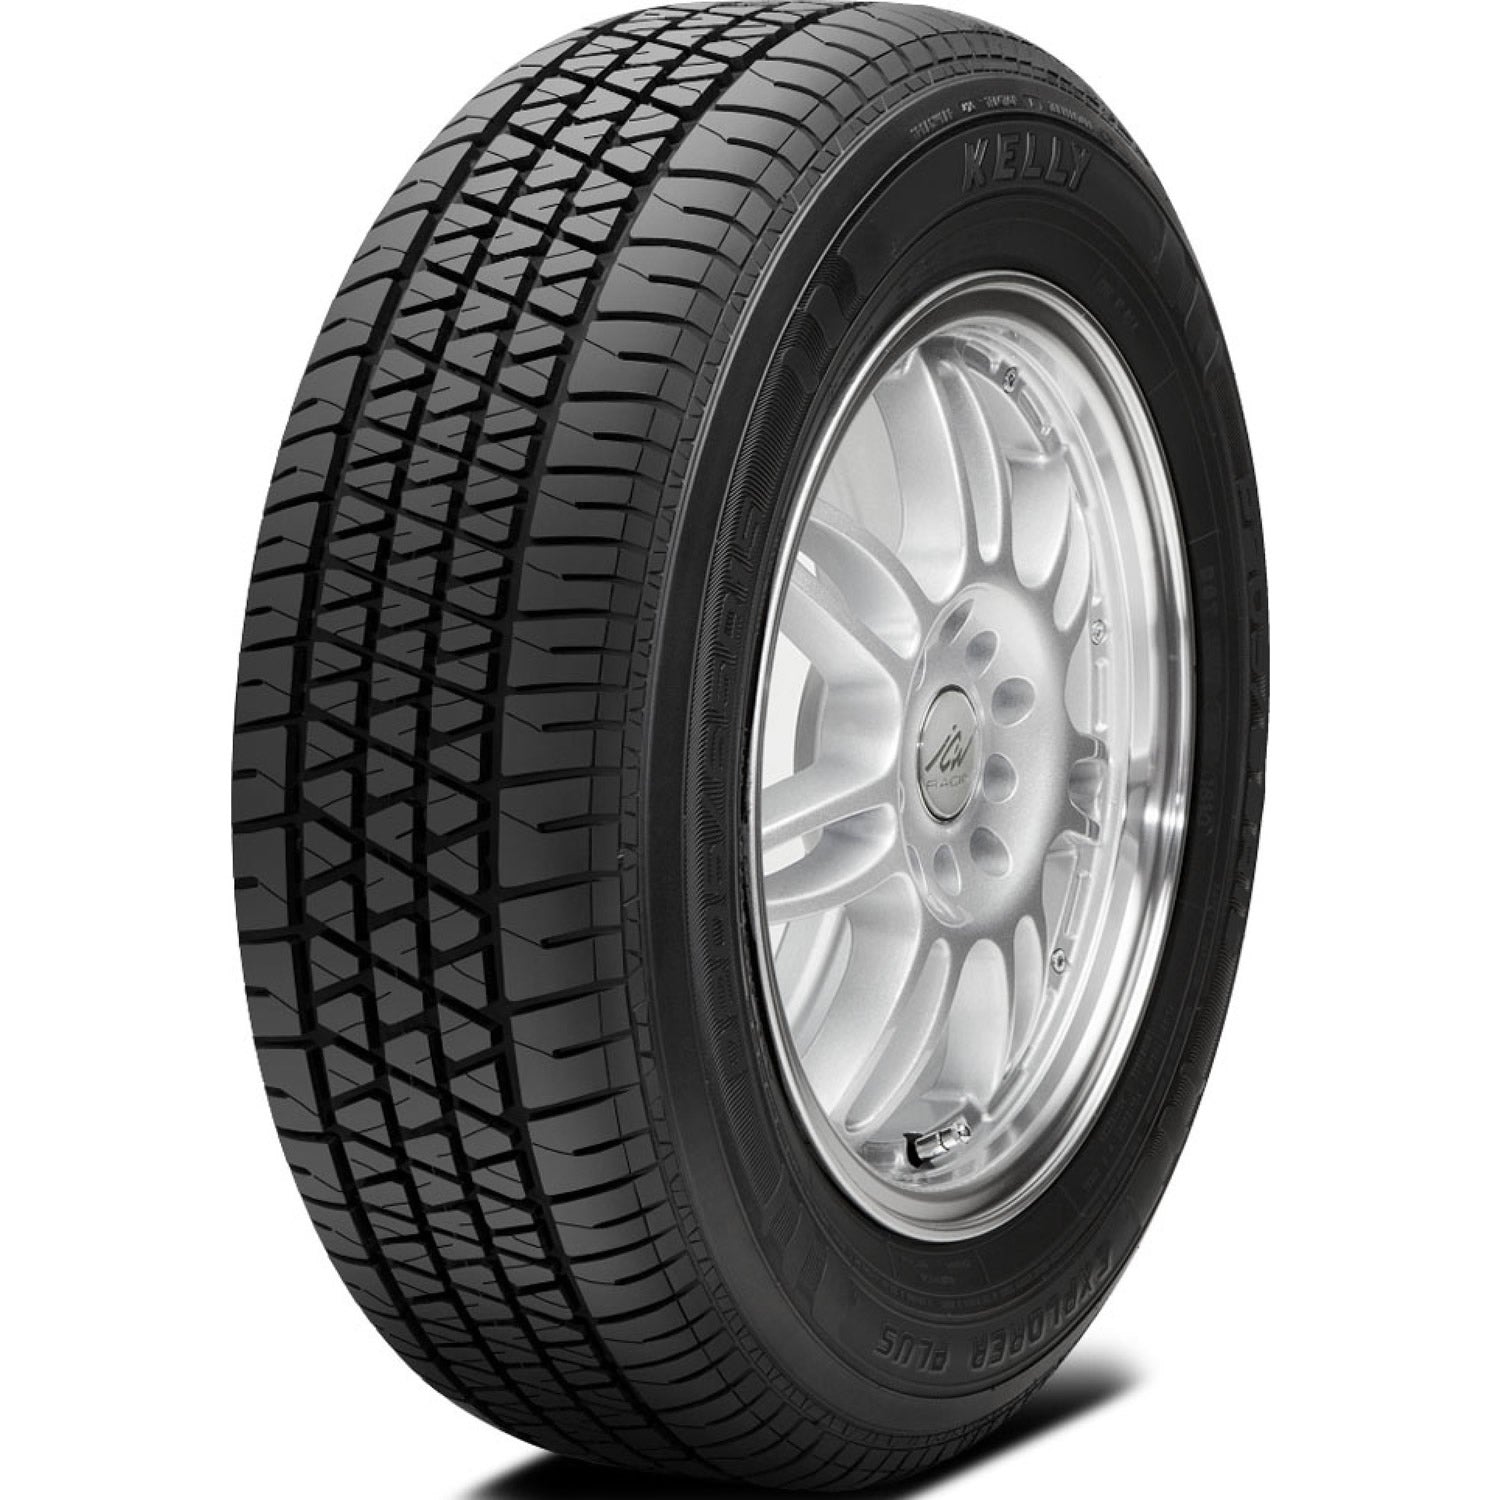 KELLY EXPLORER PLUS 215/65R15 (26X8.7R 15) Tires